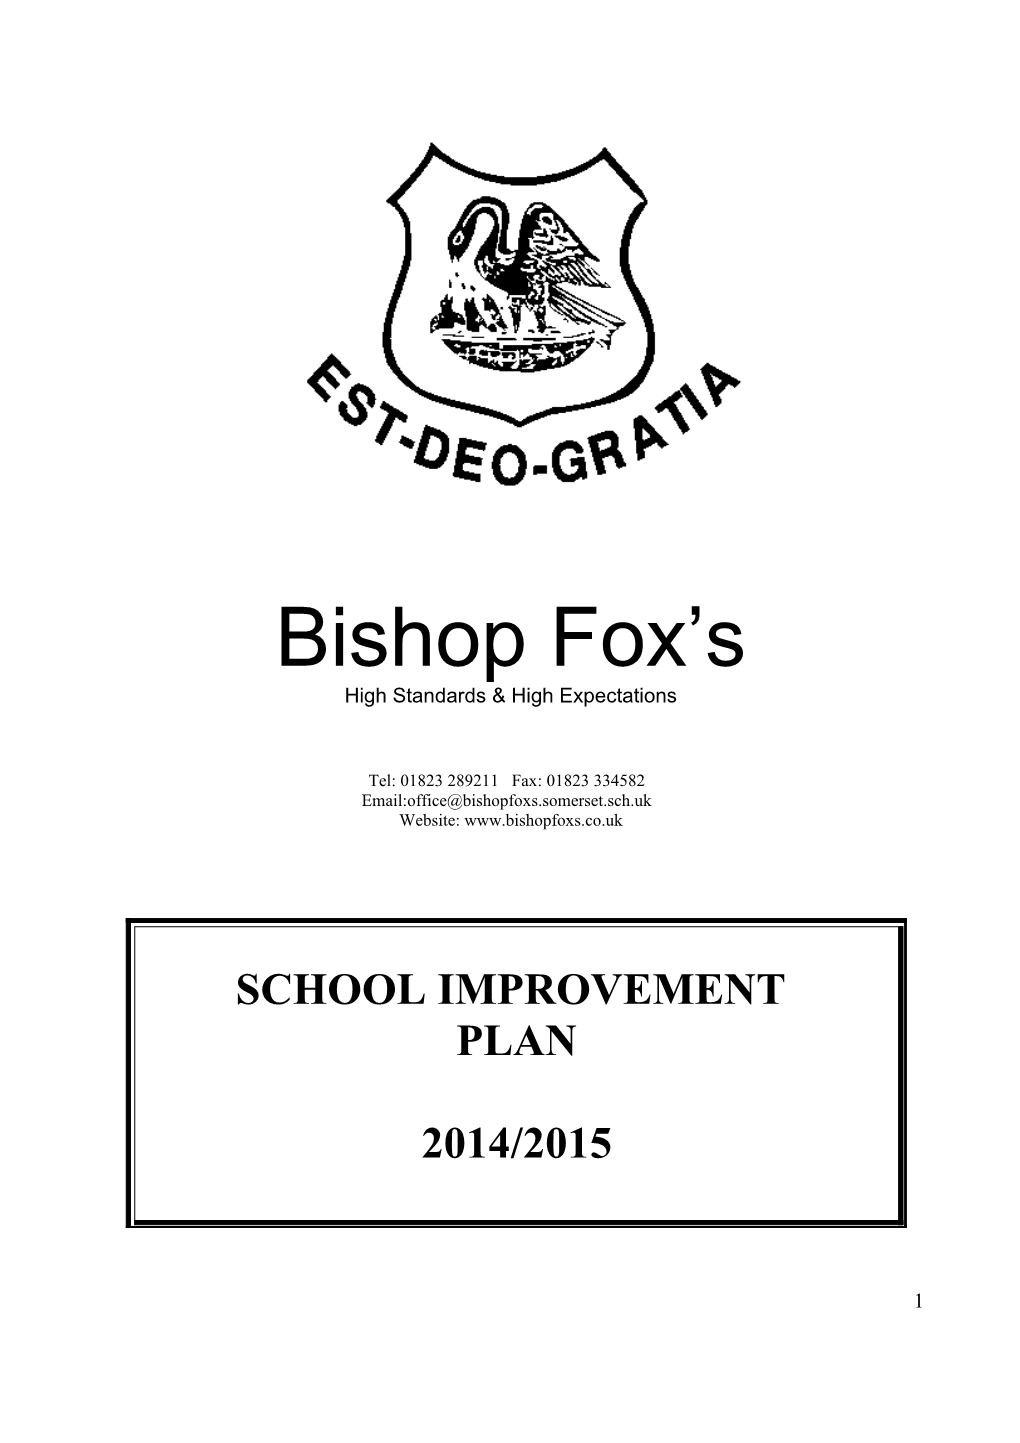 The School Improvement Plan